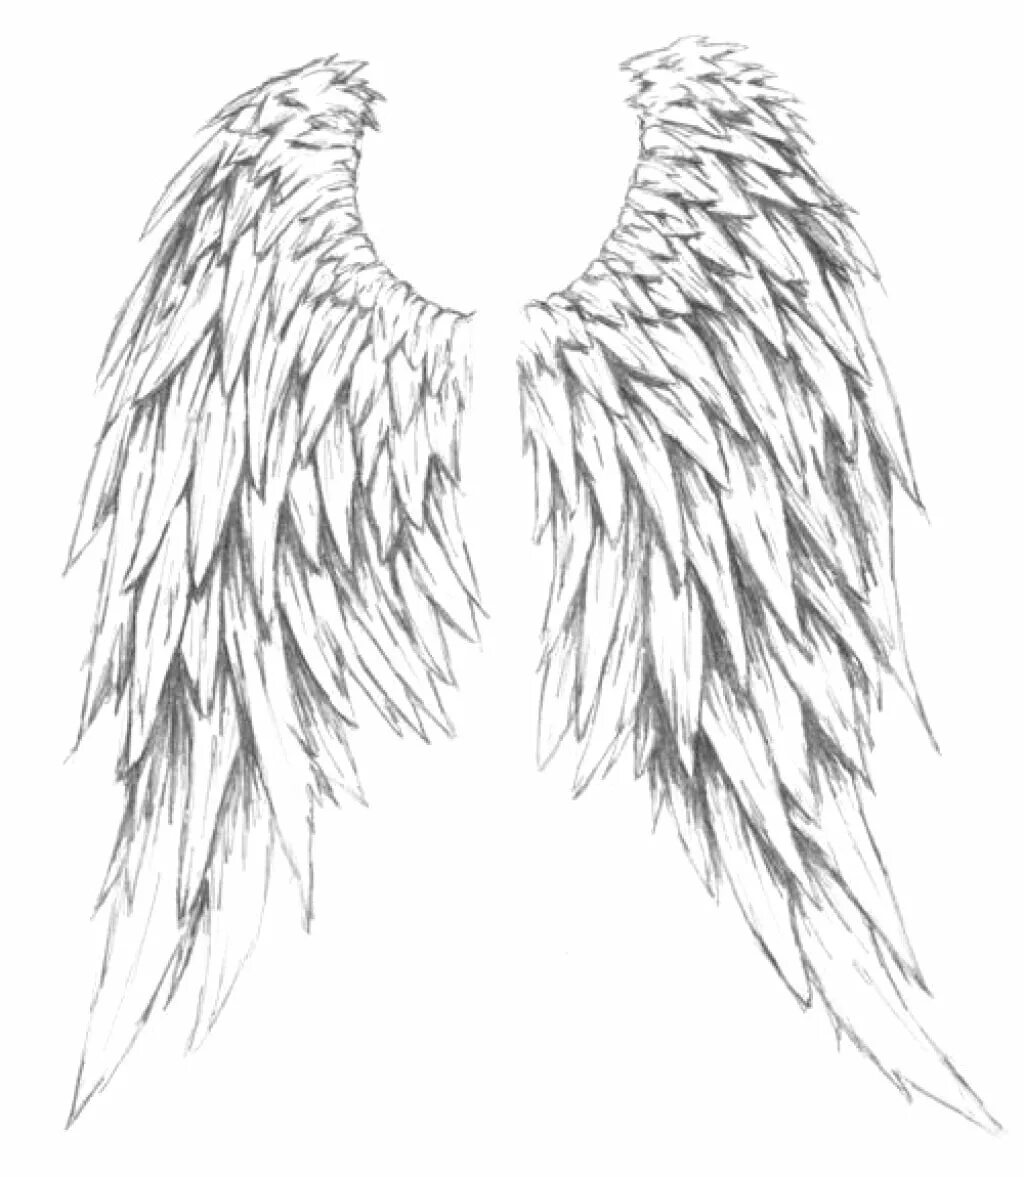 Крылья эскиз. Крылья ангела. Эскизы татуировок Крылья. Тату Крылья на спине эскиз. Крыло ангела читать